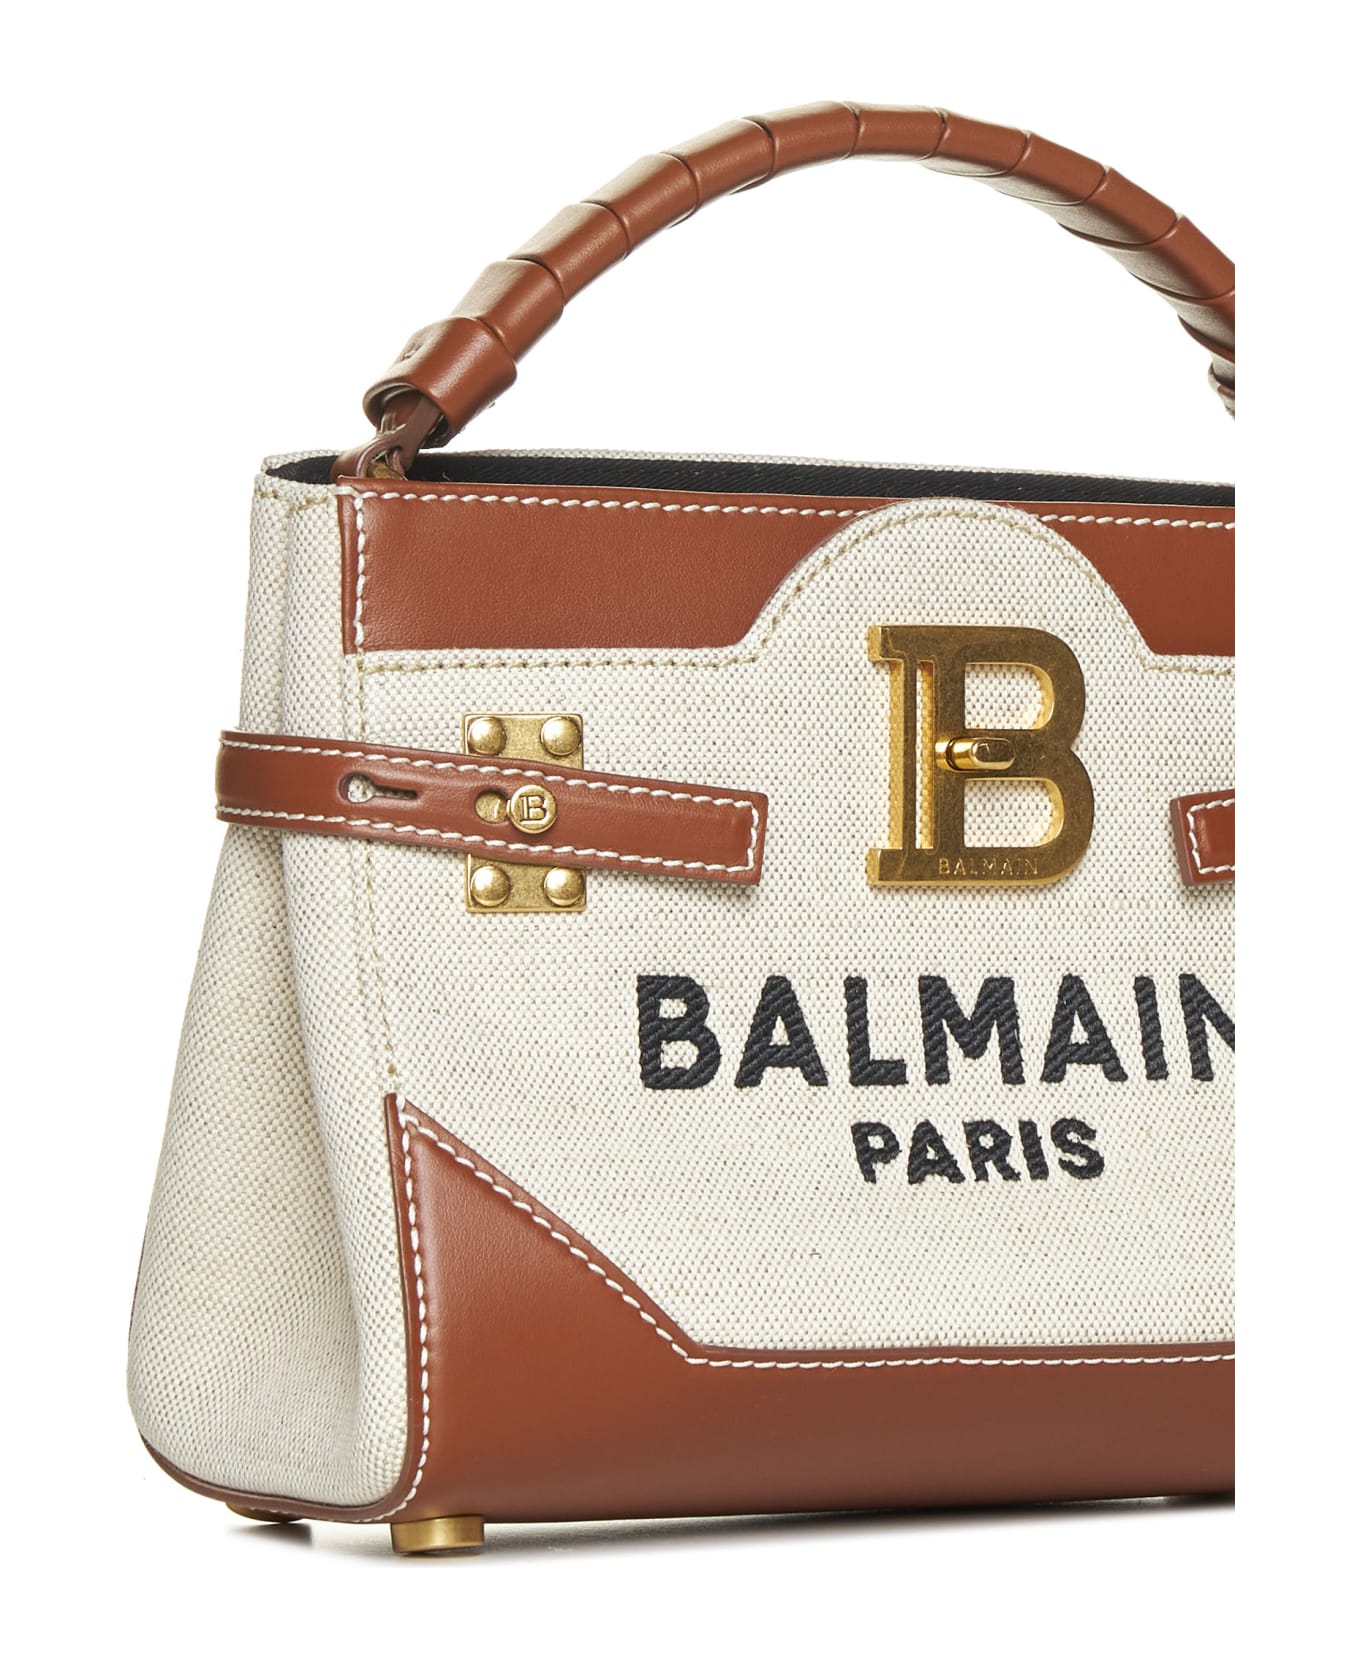 Balmain B-buzz 22 Top Handle Handbag - Naturel/marron